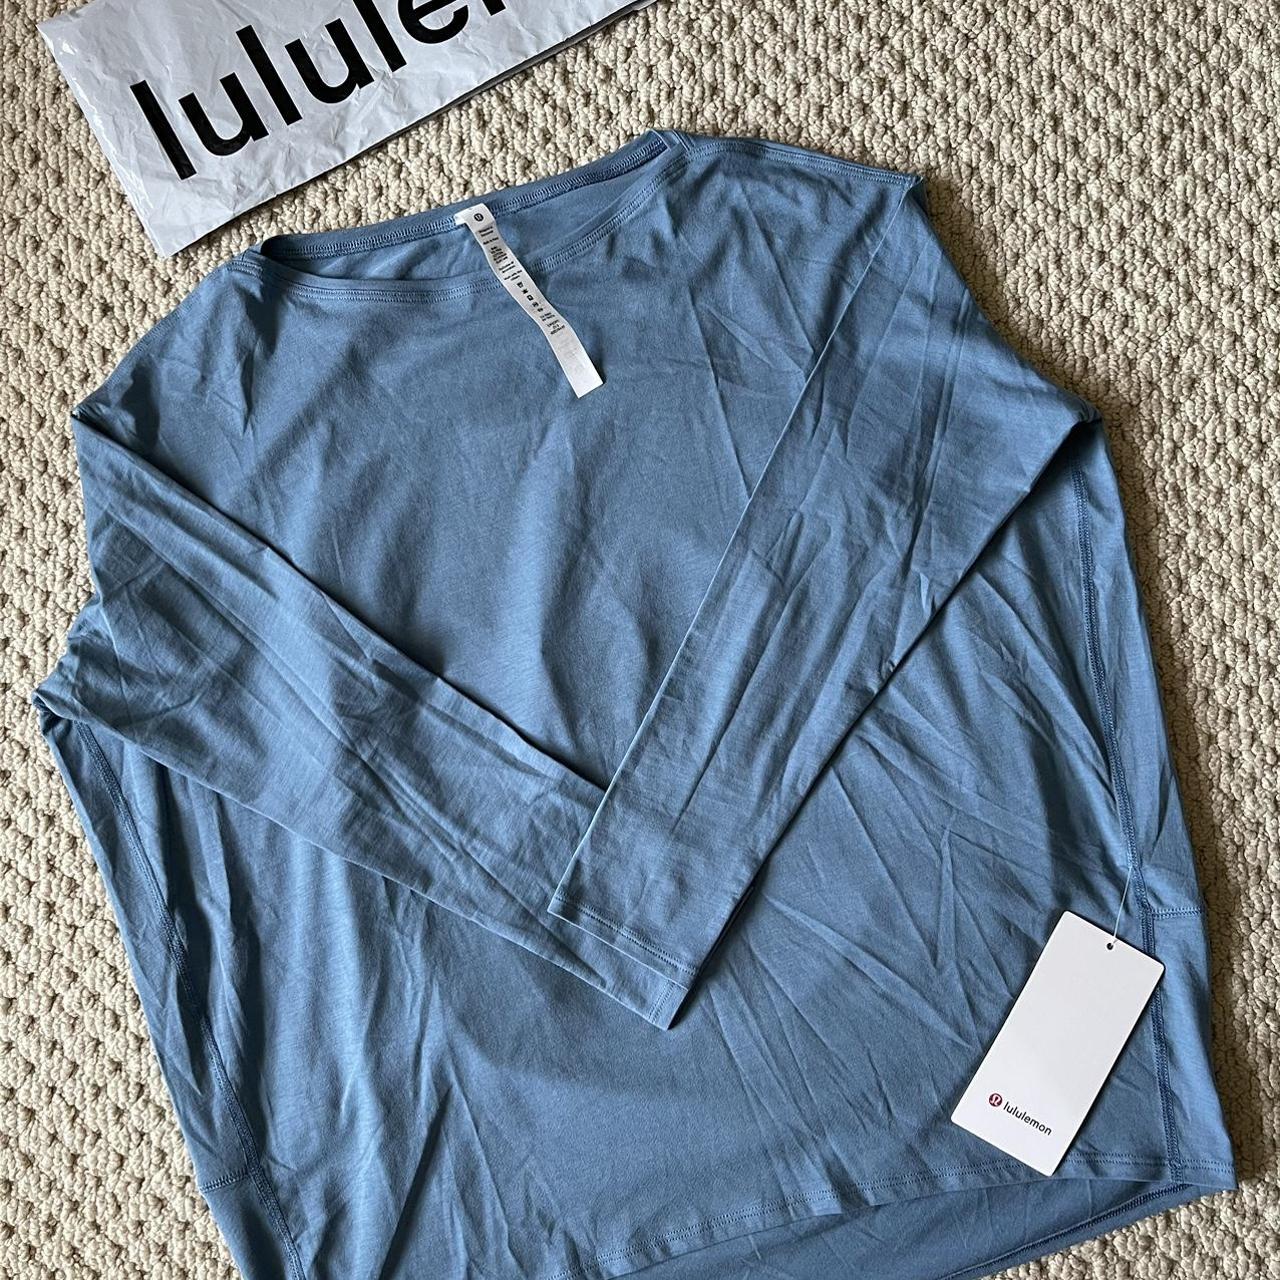 Lululemon Back in Action Long-Sleeve Shirt Utility - Depop